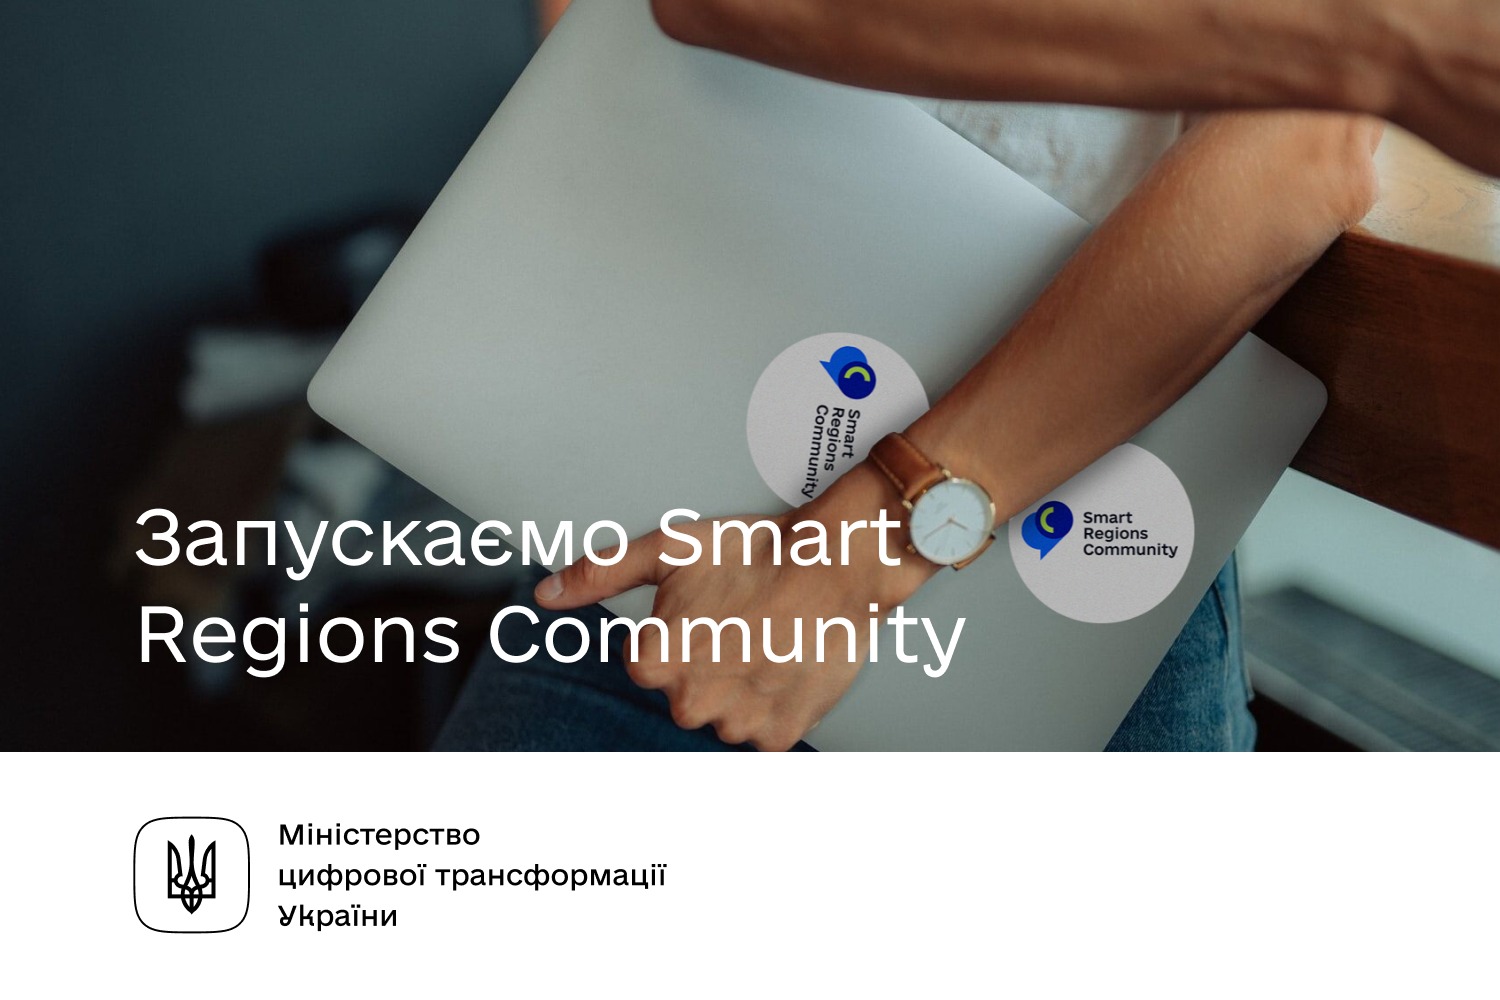 Smart Regions community